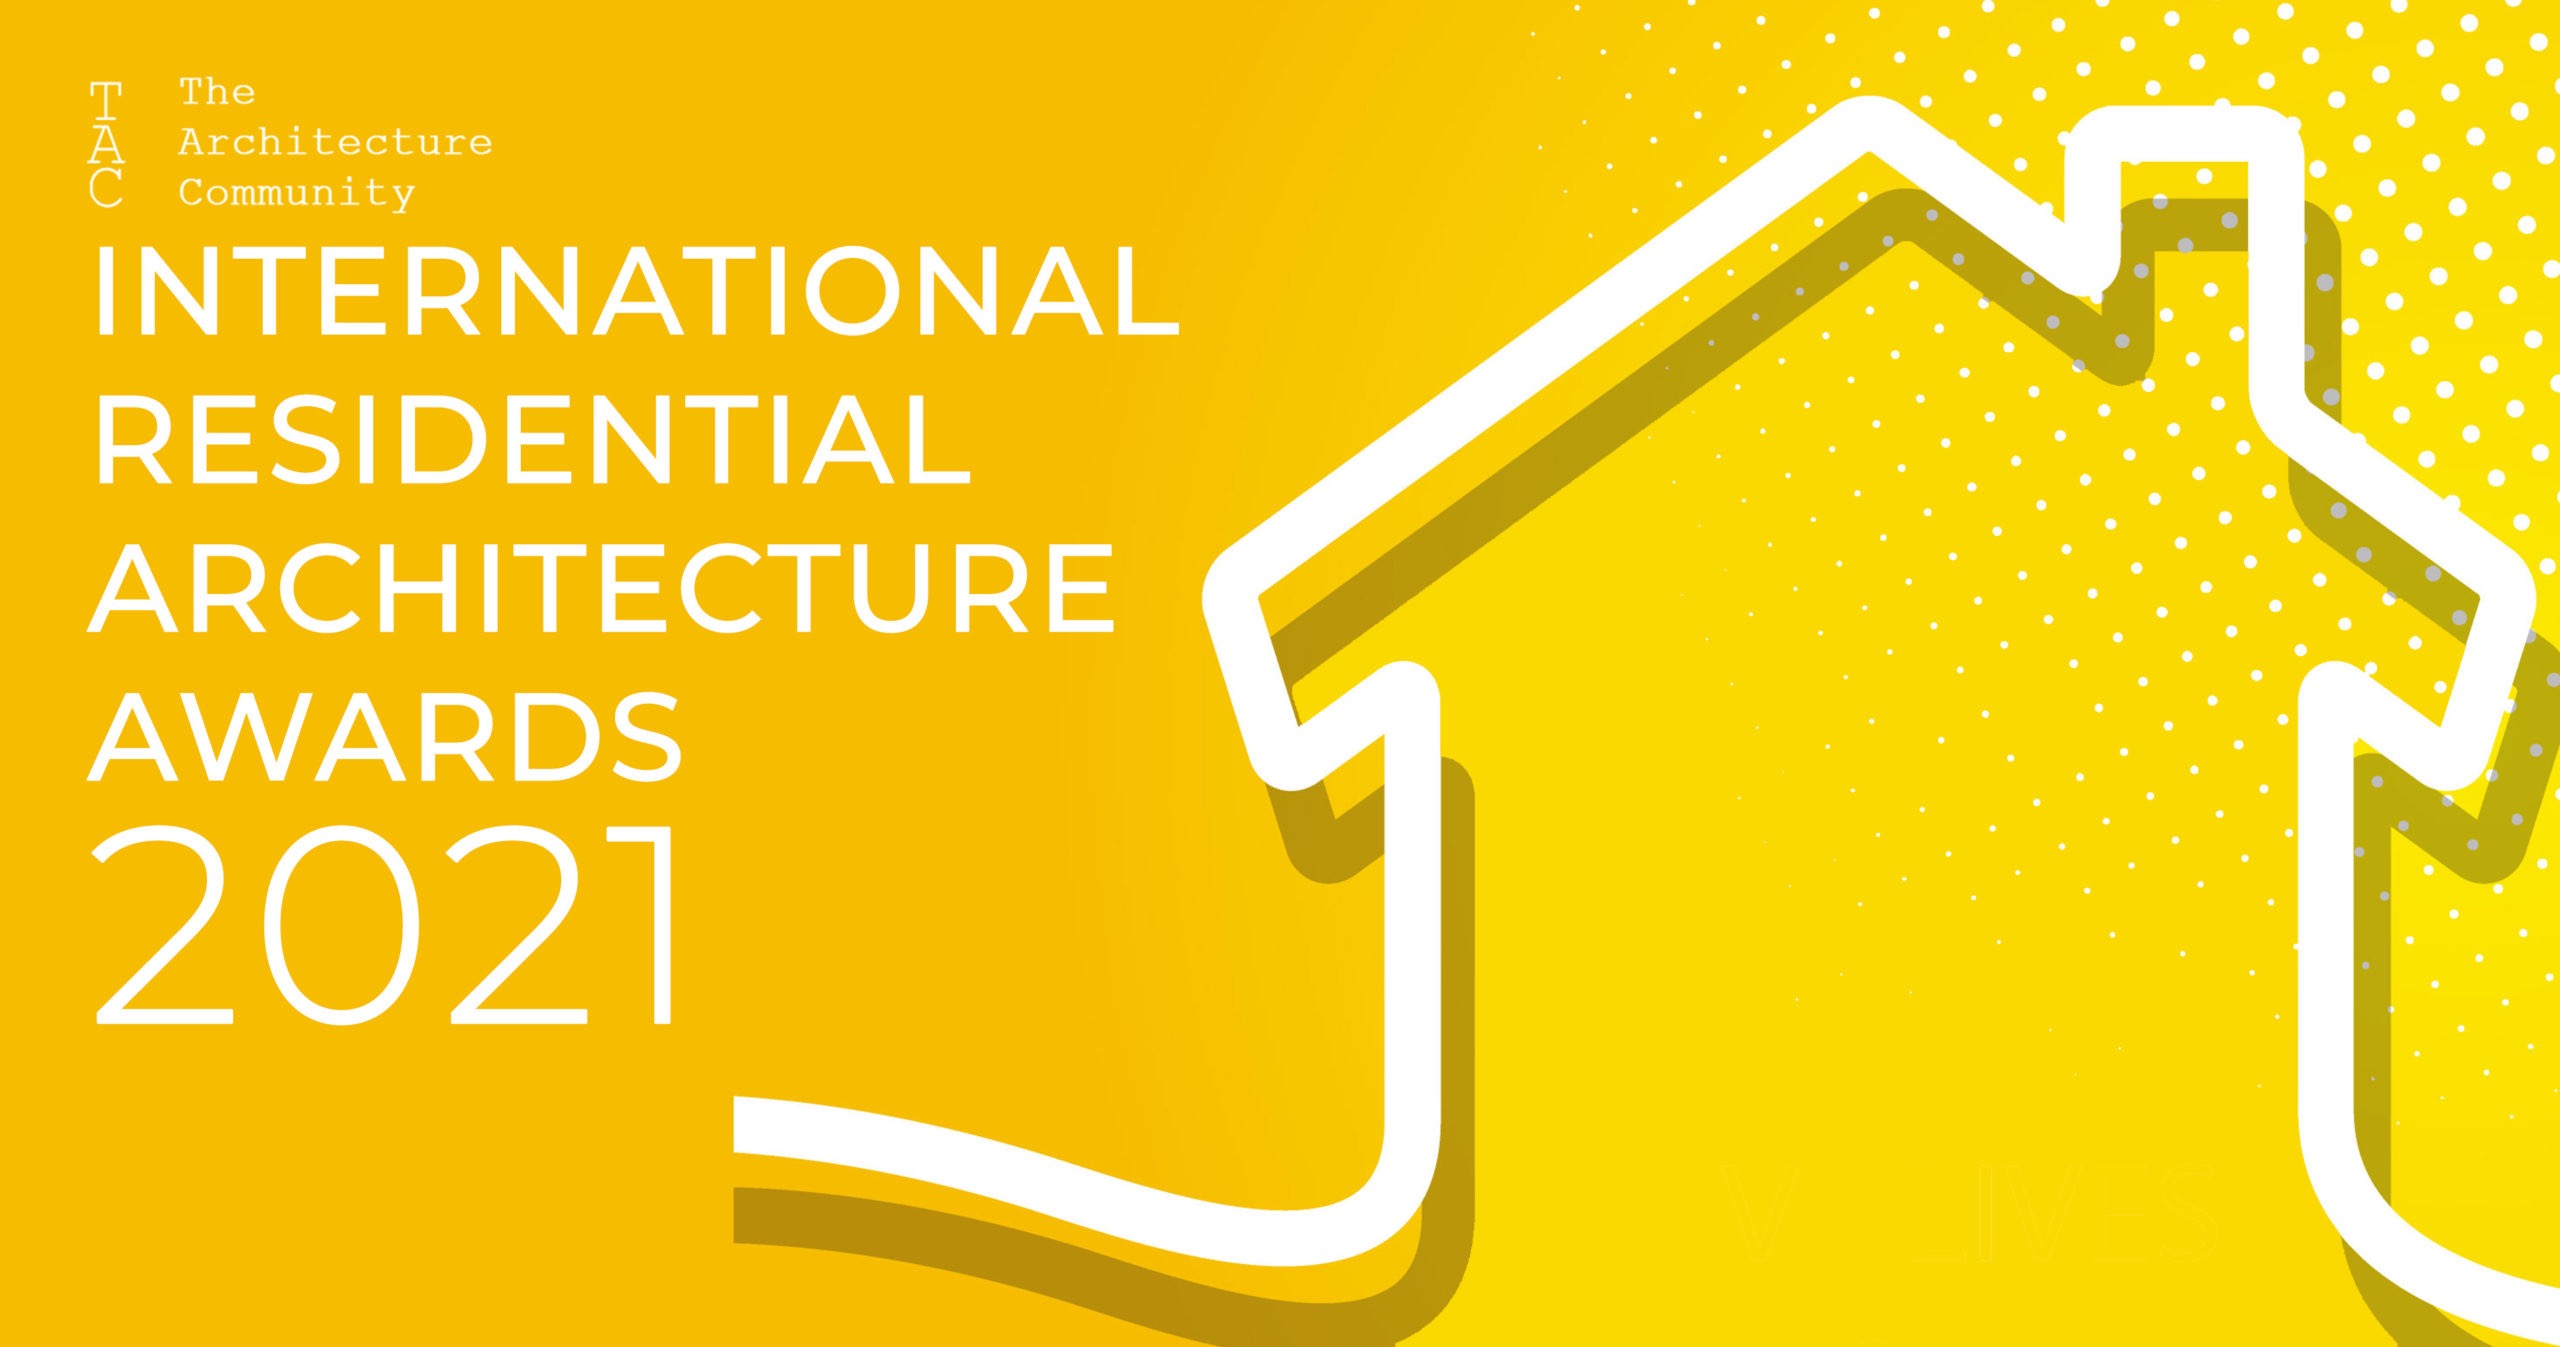 国际住宅建筑奖 INTERNATIONAL RESIDENTIAL ARCHITECTURE AWARDS